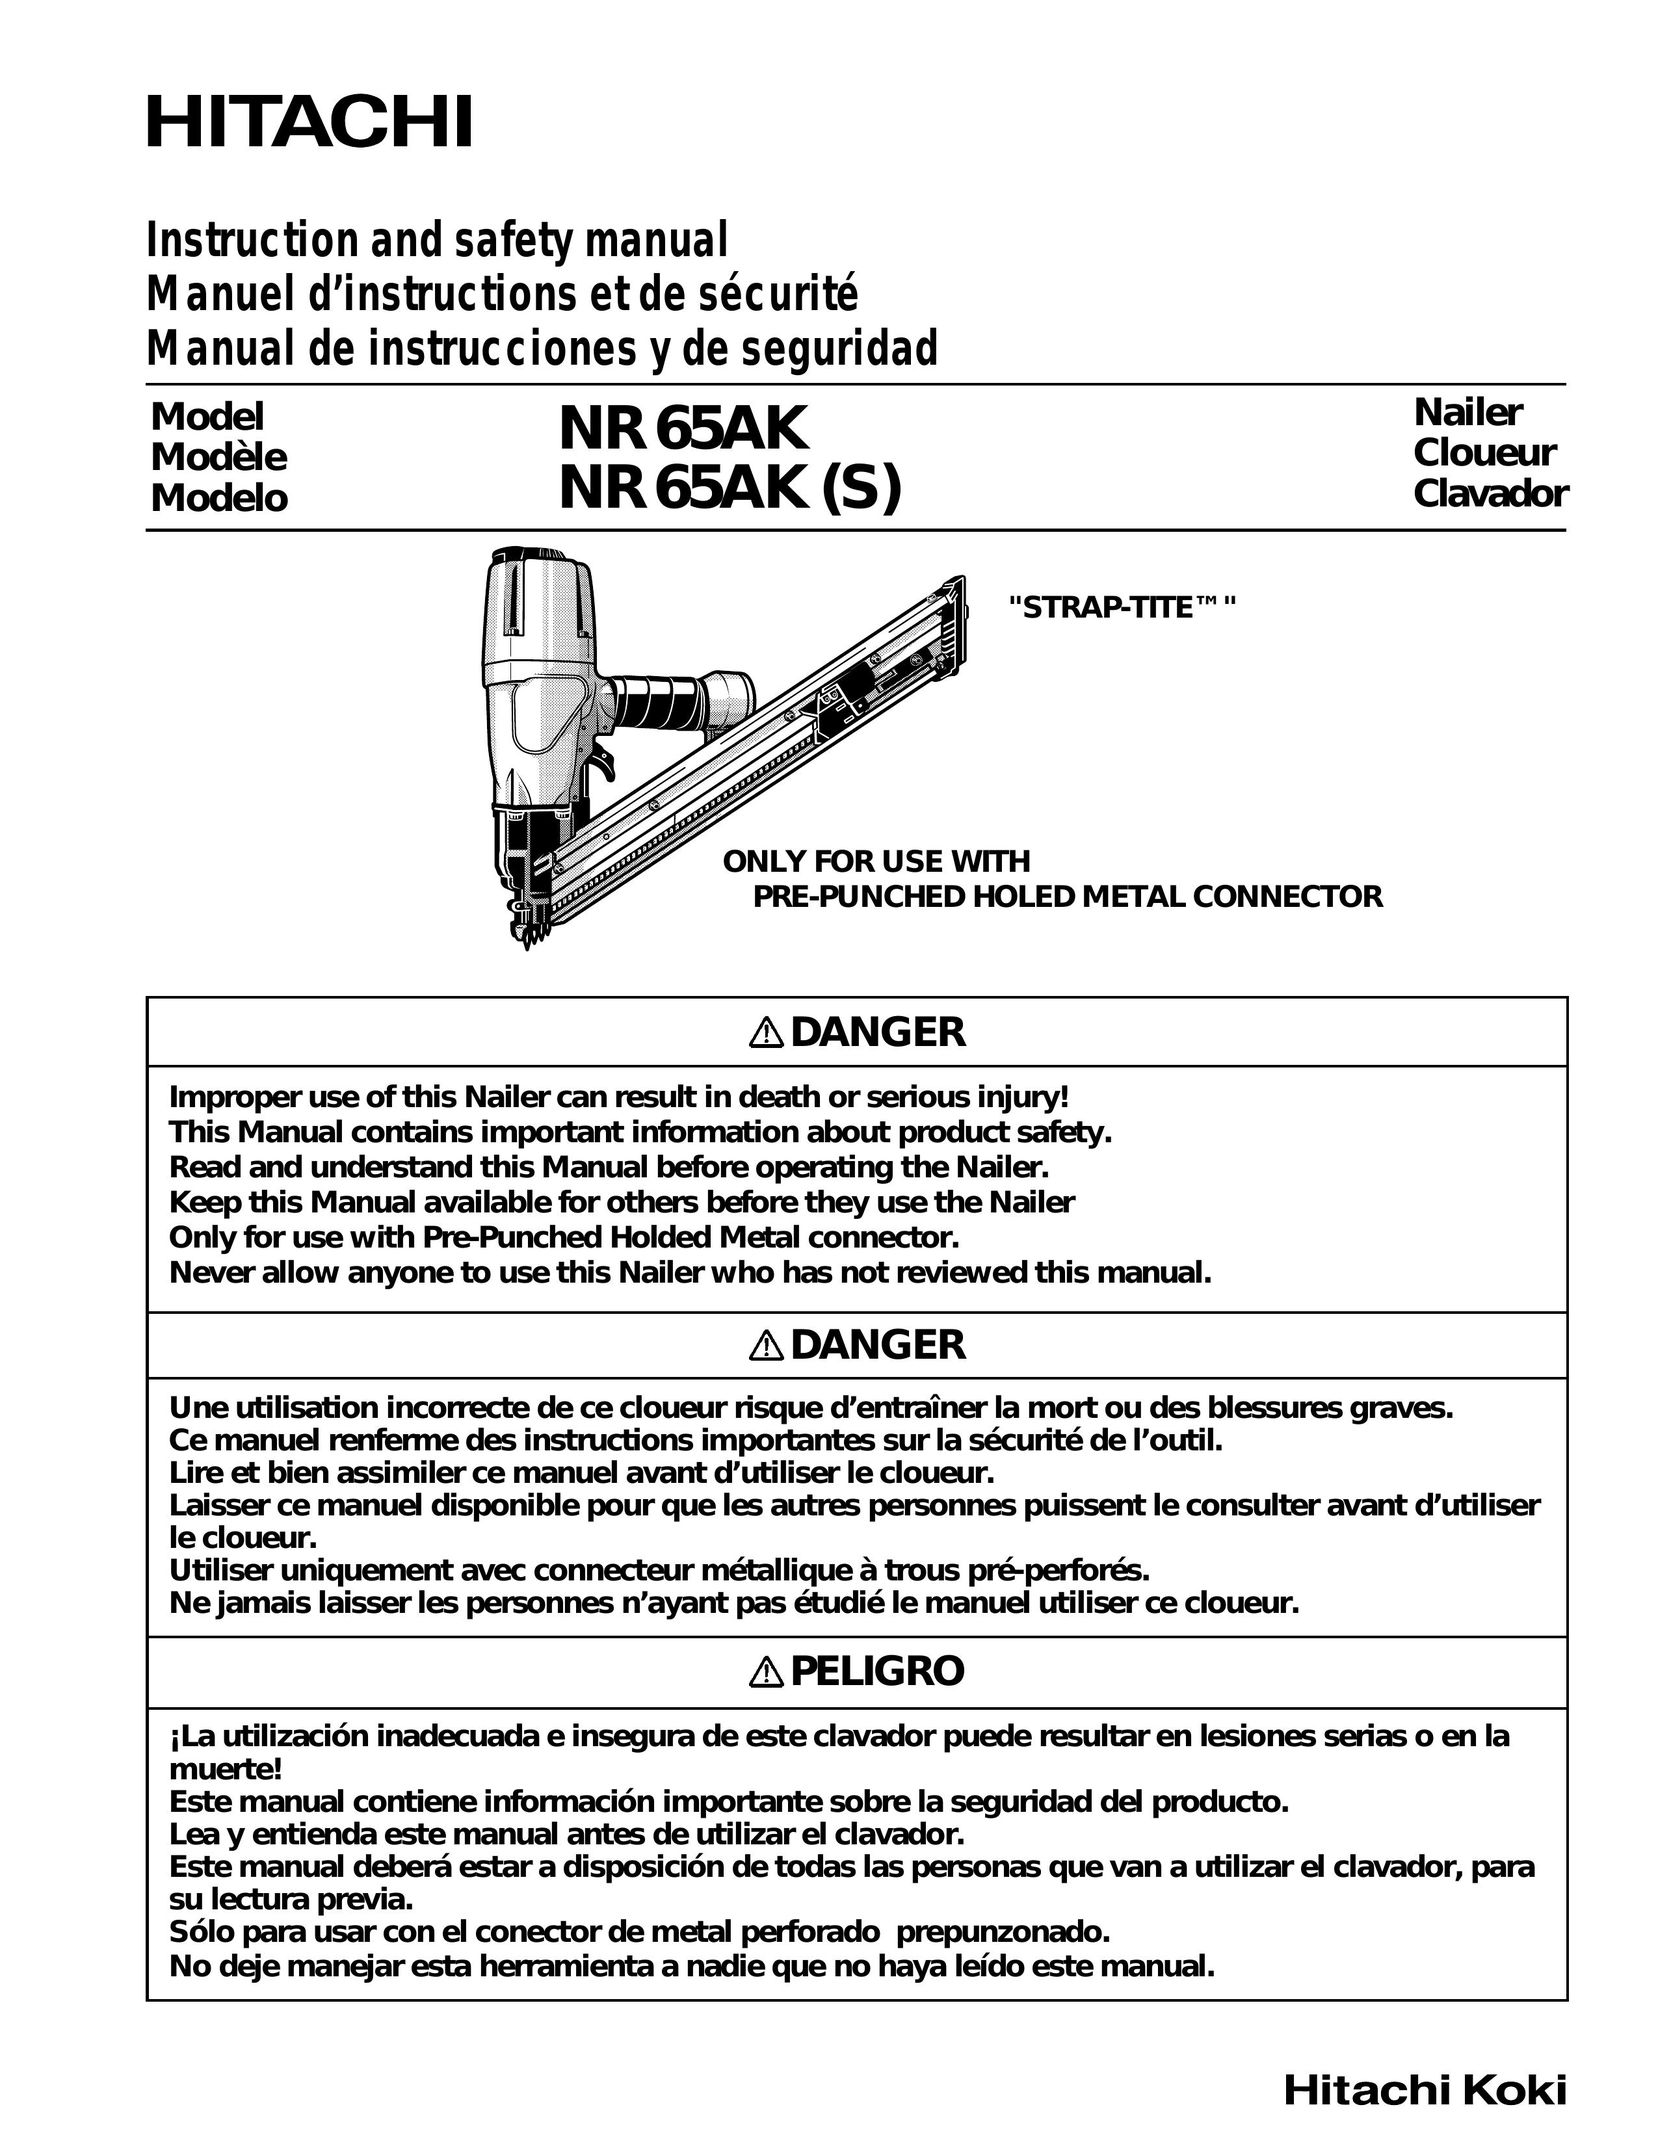 Hitachi nt65ks Nail Gun User Manual